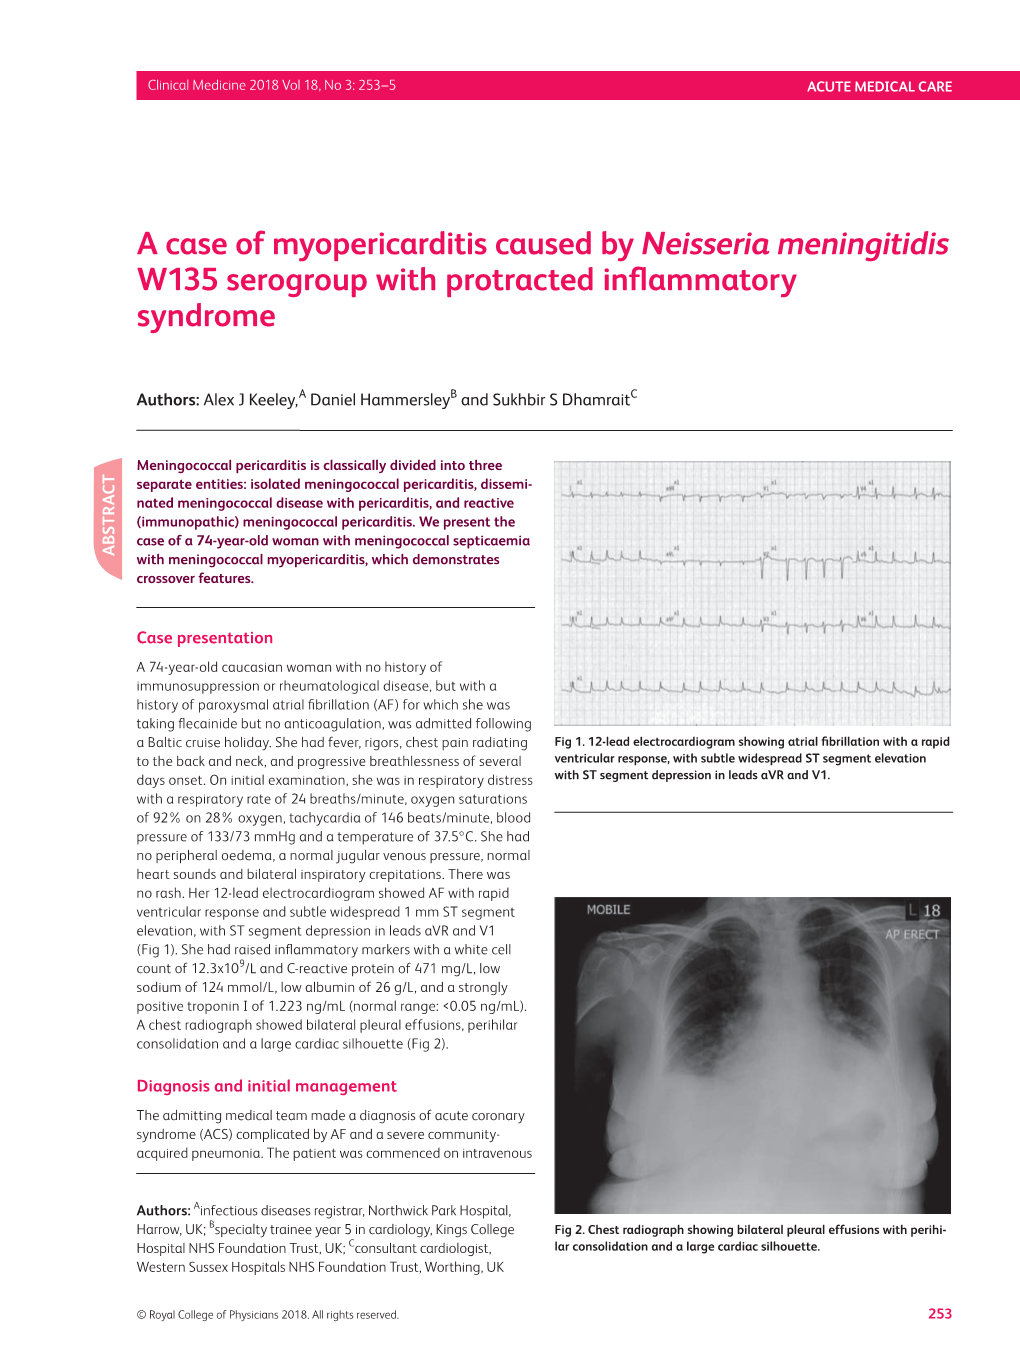 A Case of Myopericarditis Caused by Neisseria Meningitidis W135